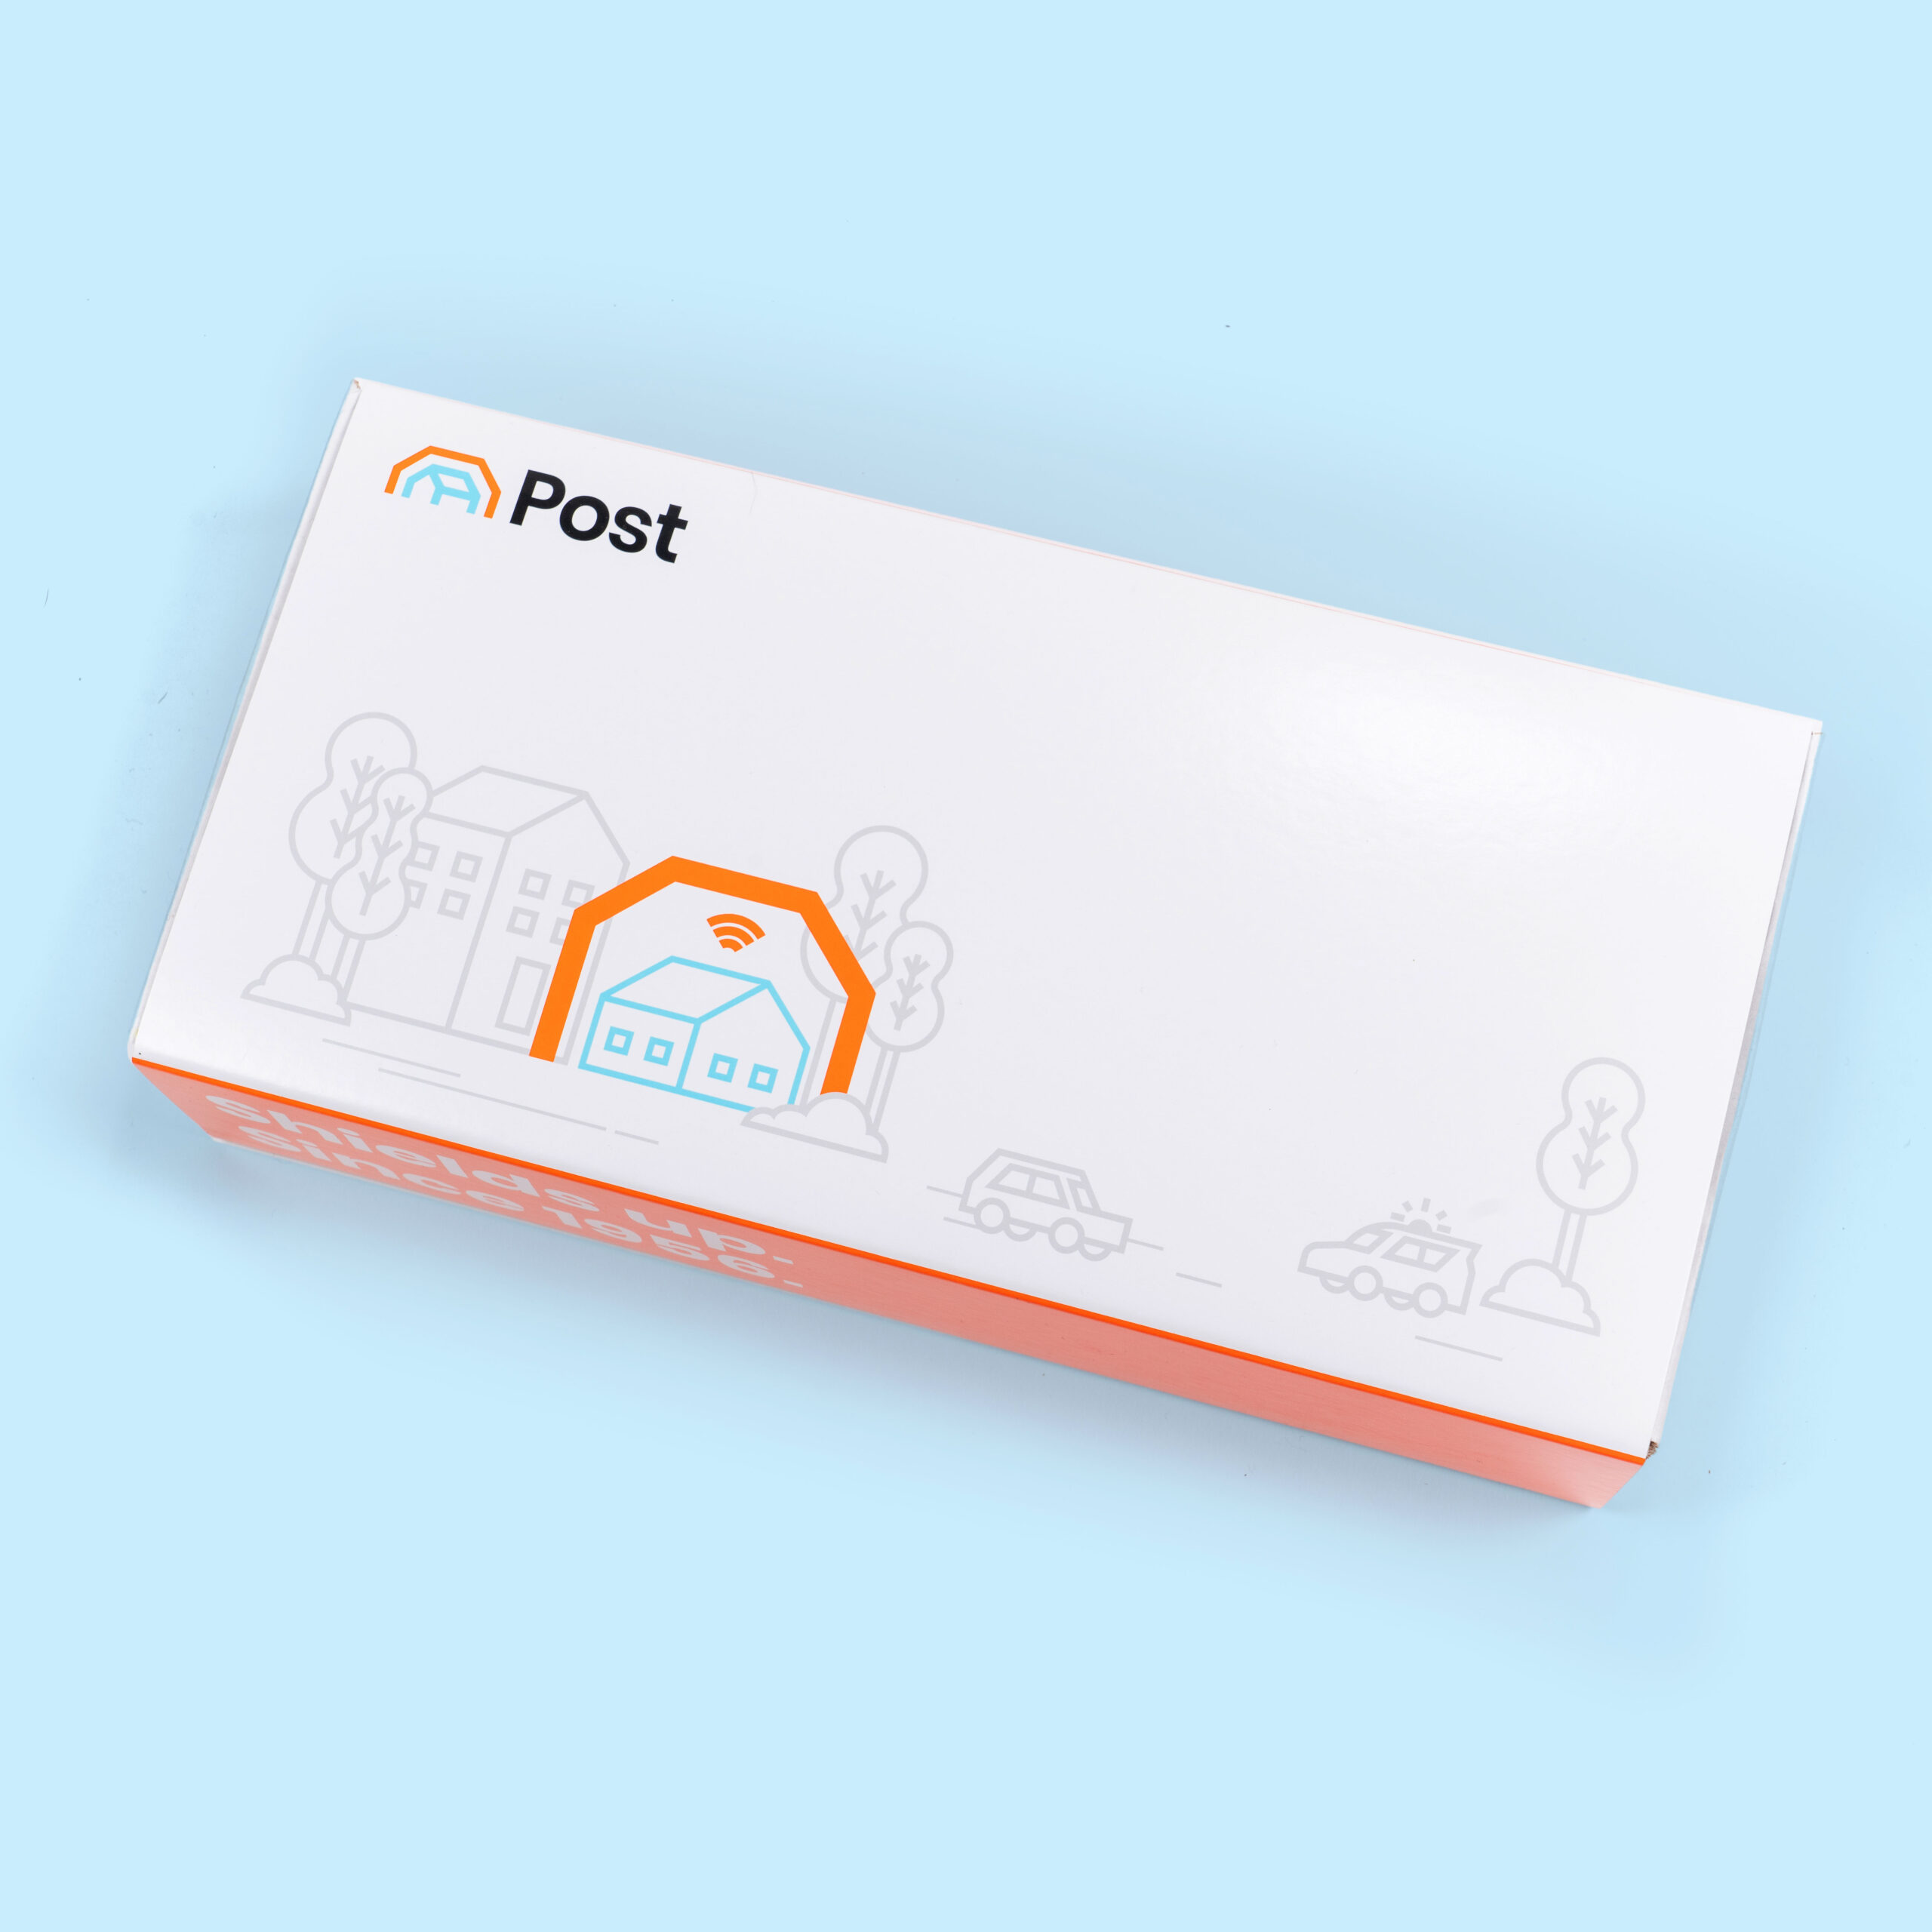 Post Alarm Packaging designed by Kilter.